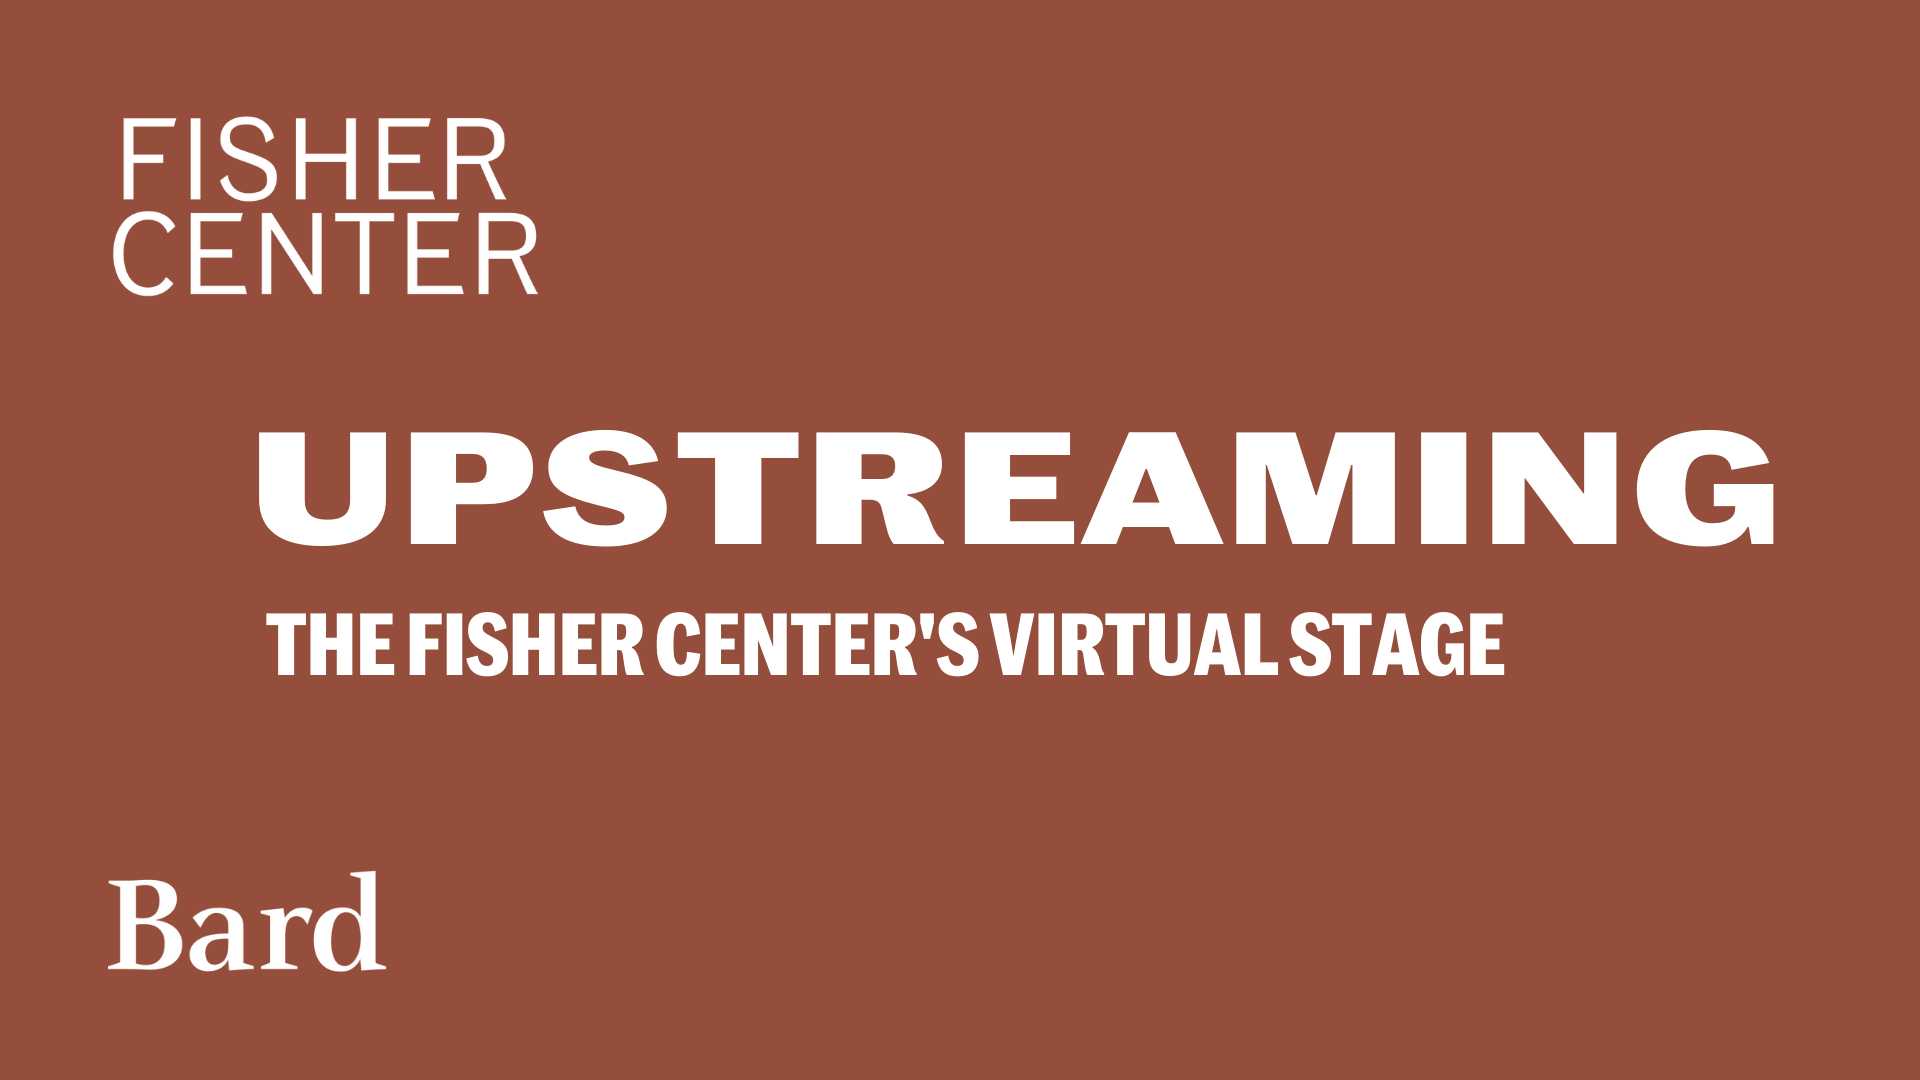 Visit https://fishercenter.bard.edu/events/UPS-daniel-fish/